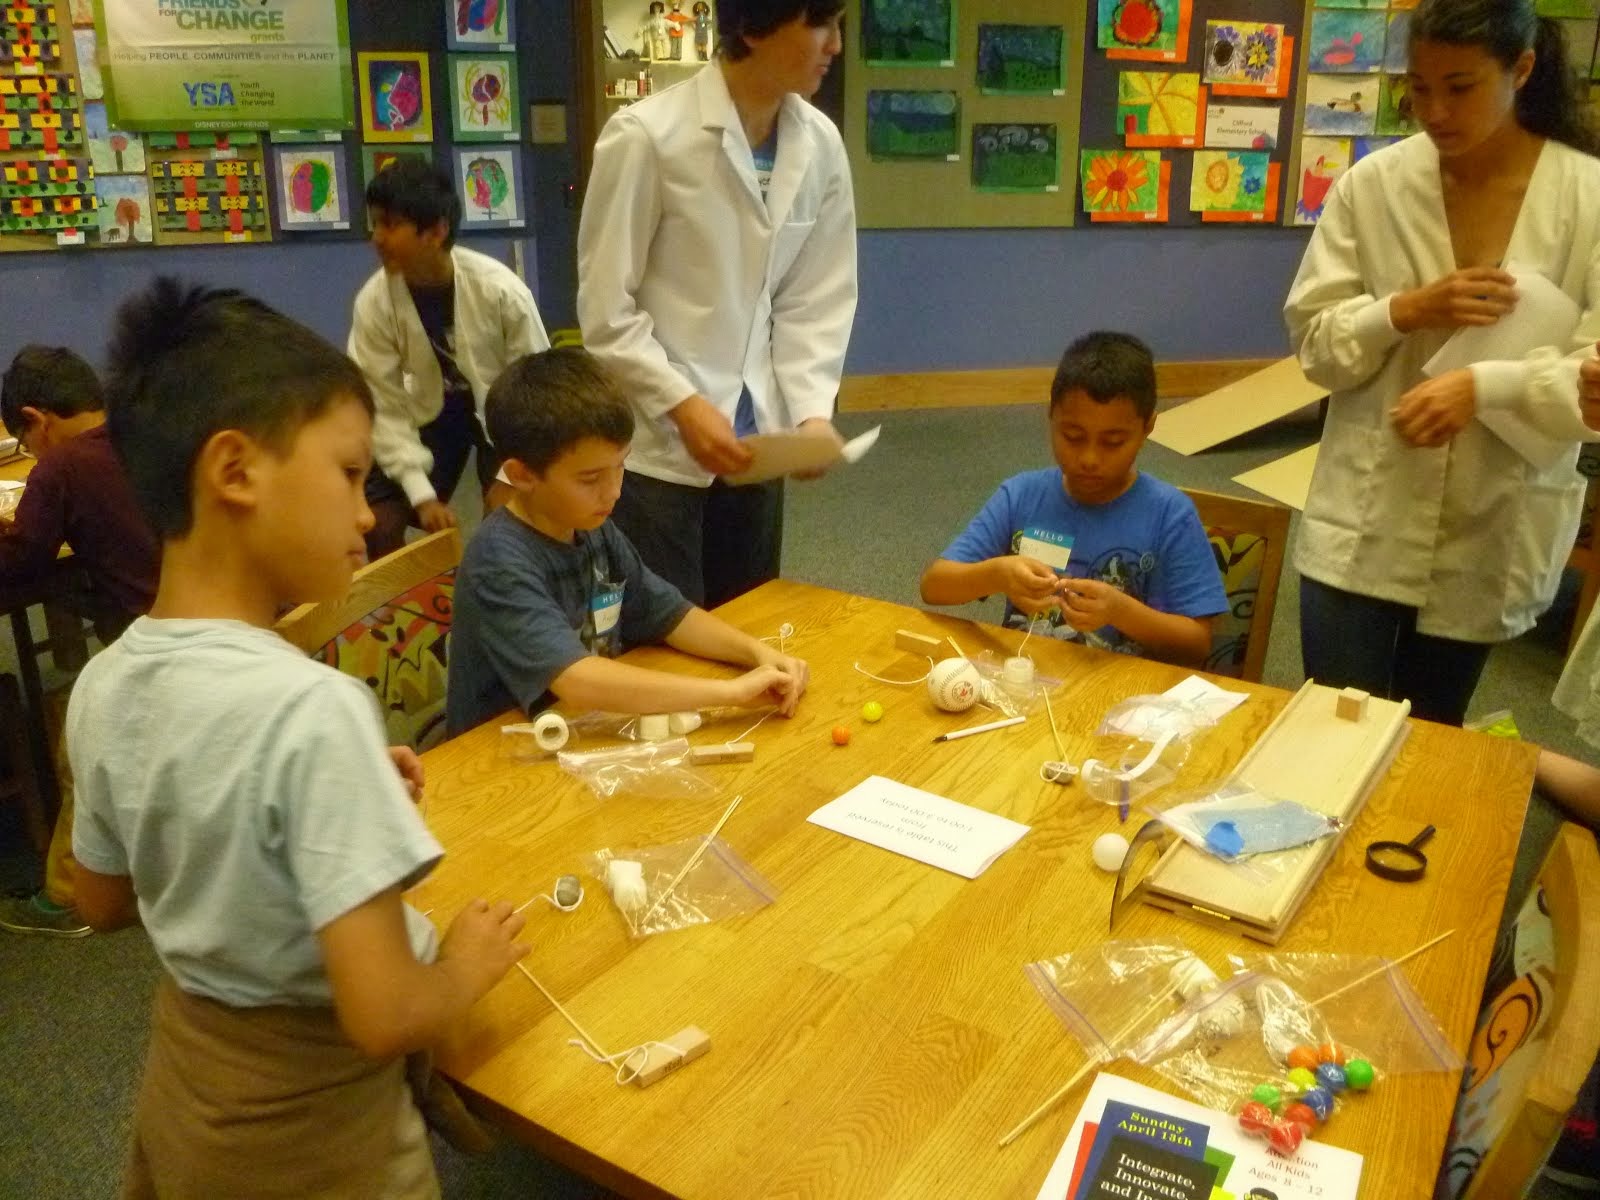 STEM class - helping kids learn through fun experiments